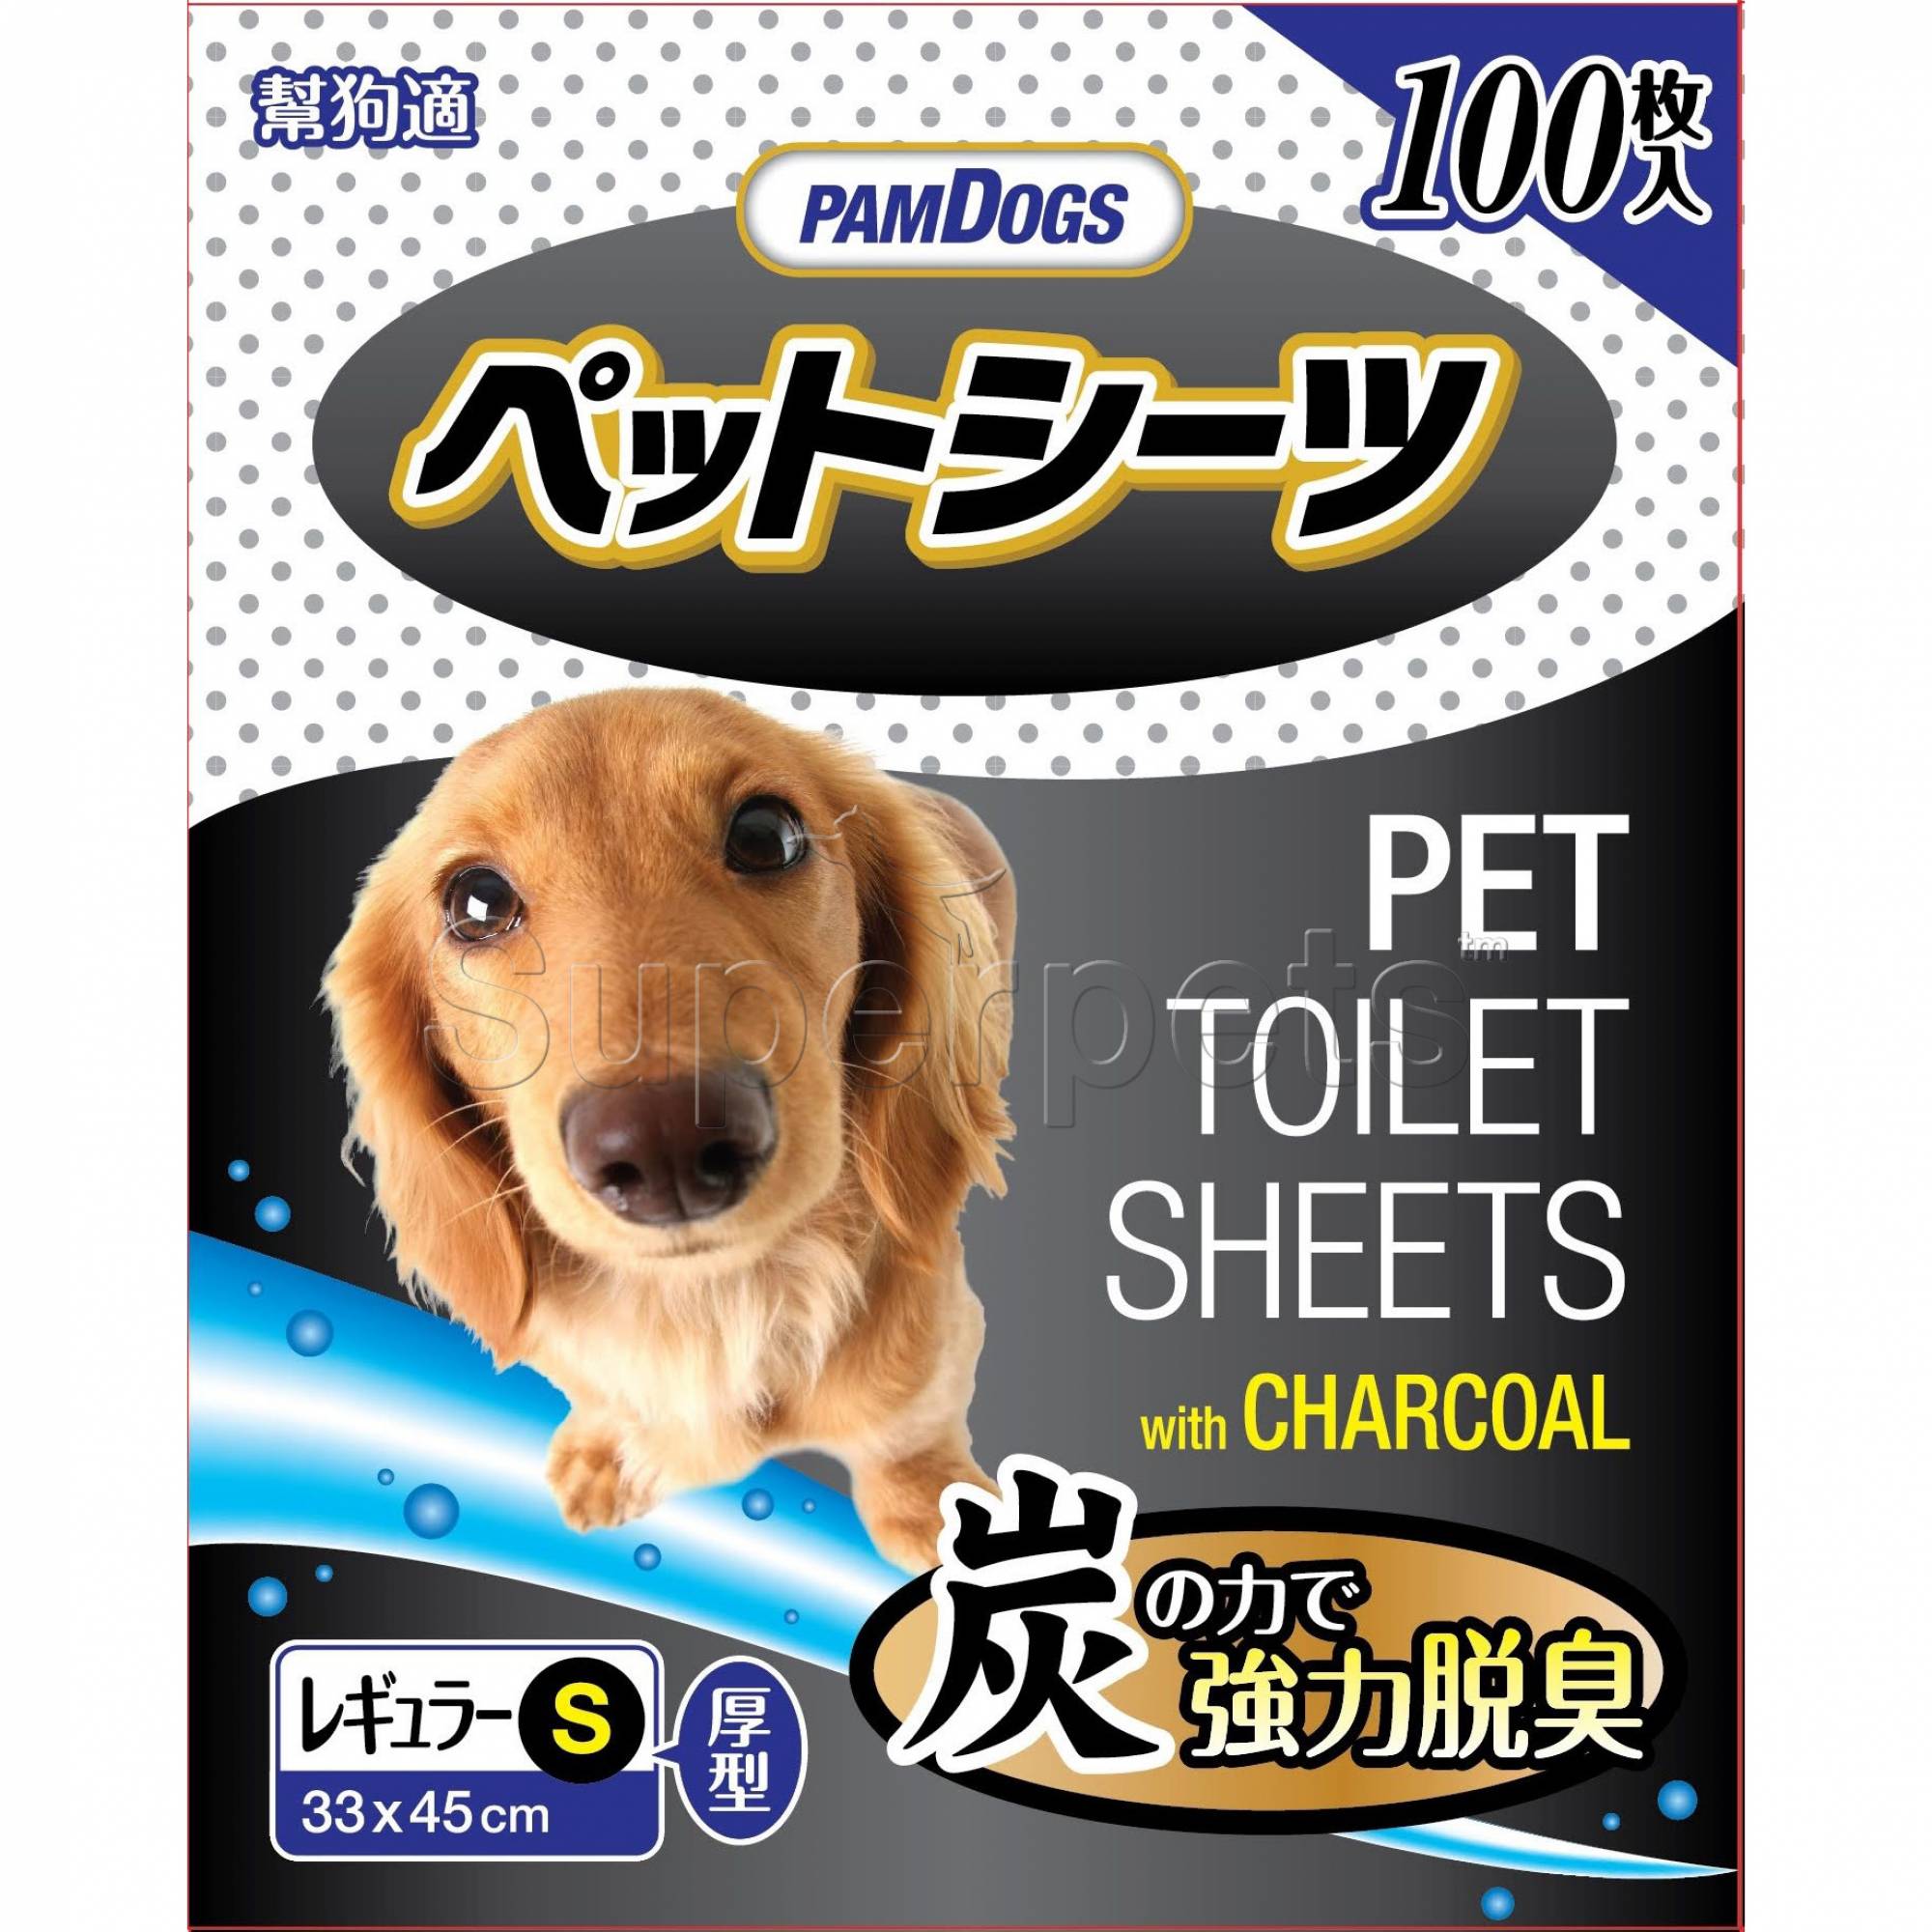 PamDogs 008 Charcoal Pet Sheets (Small) 33x45cm x100pcs